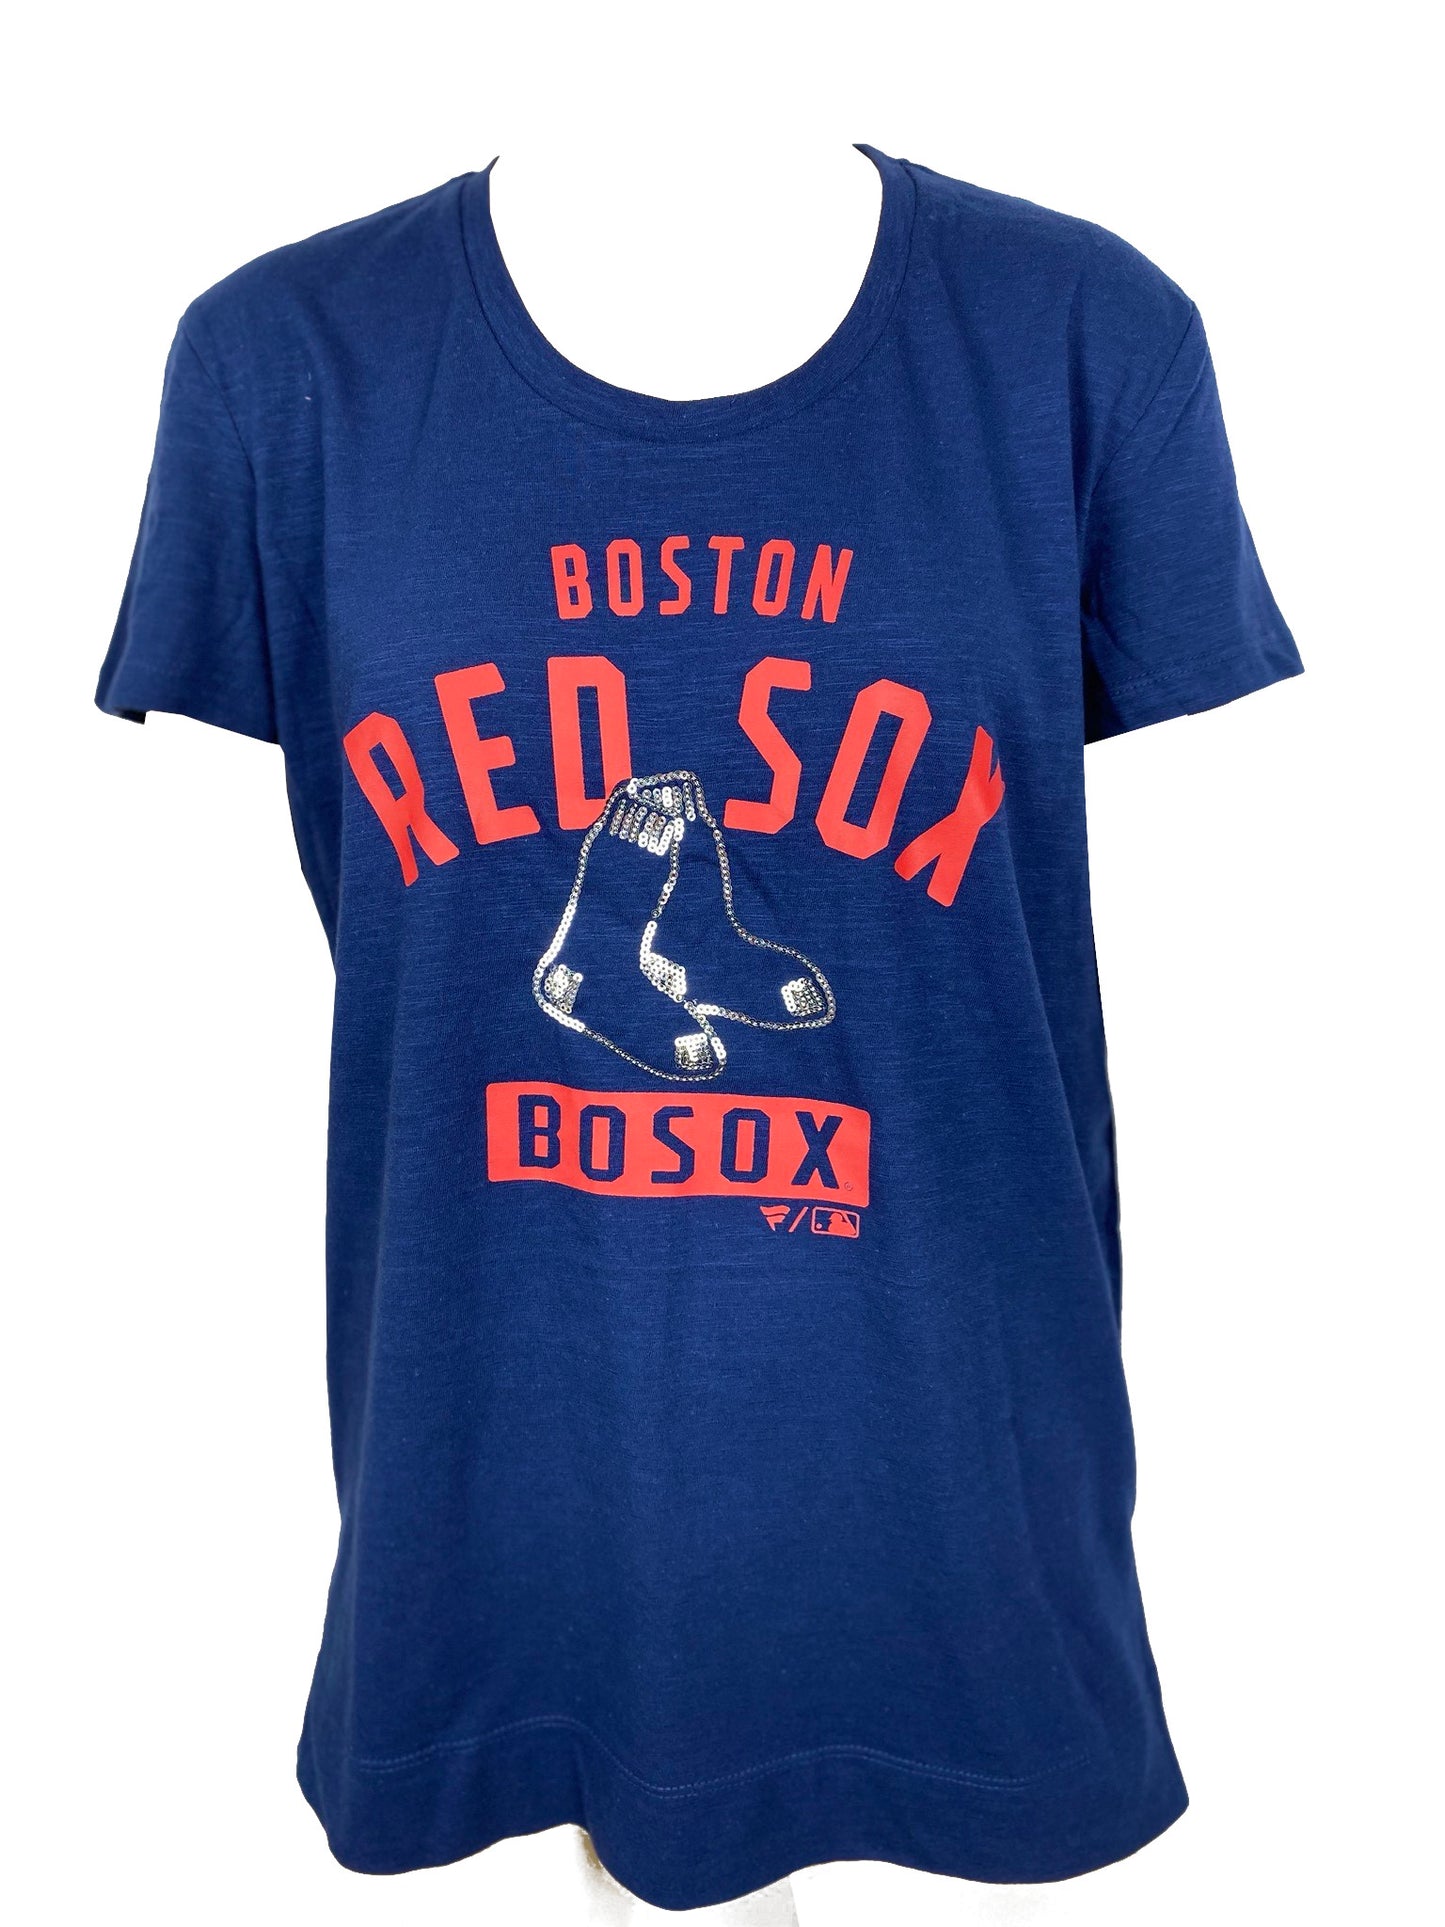 BOSTON RED SOX WOMEN'S TEAM SHIMMER T-SHIRT